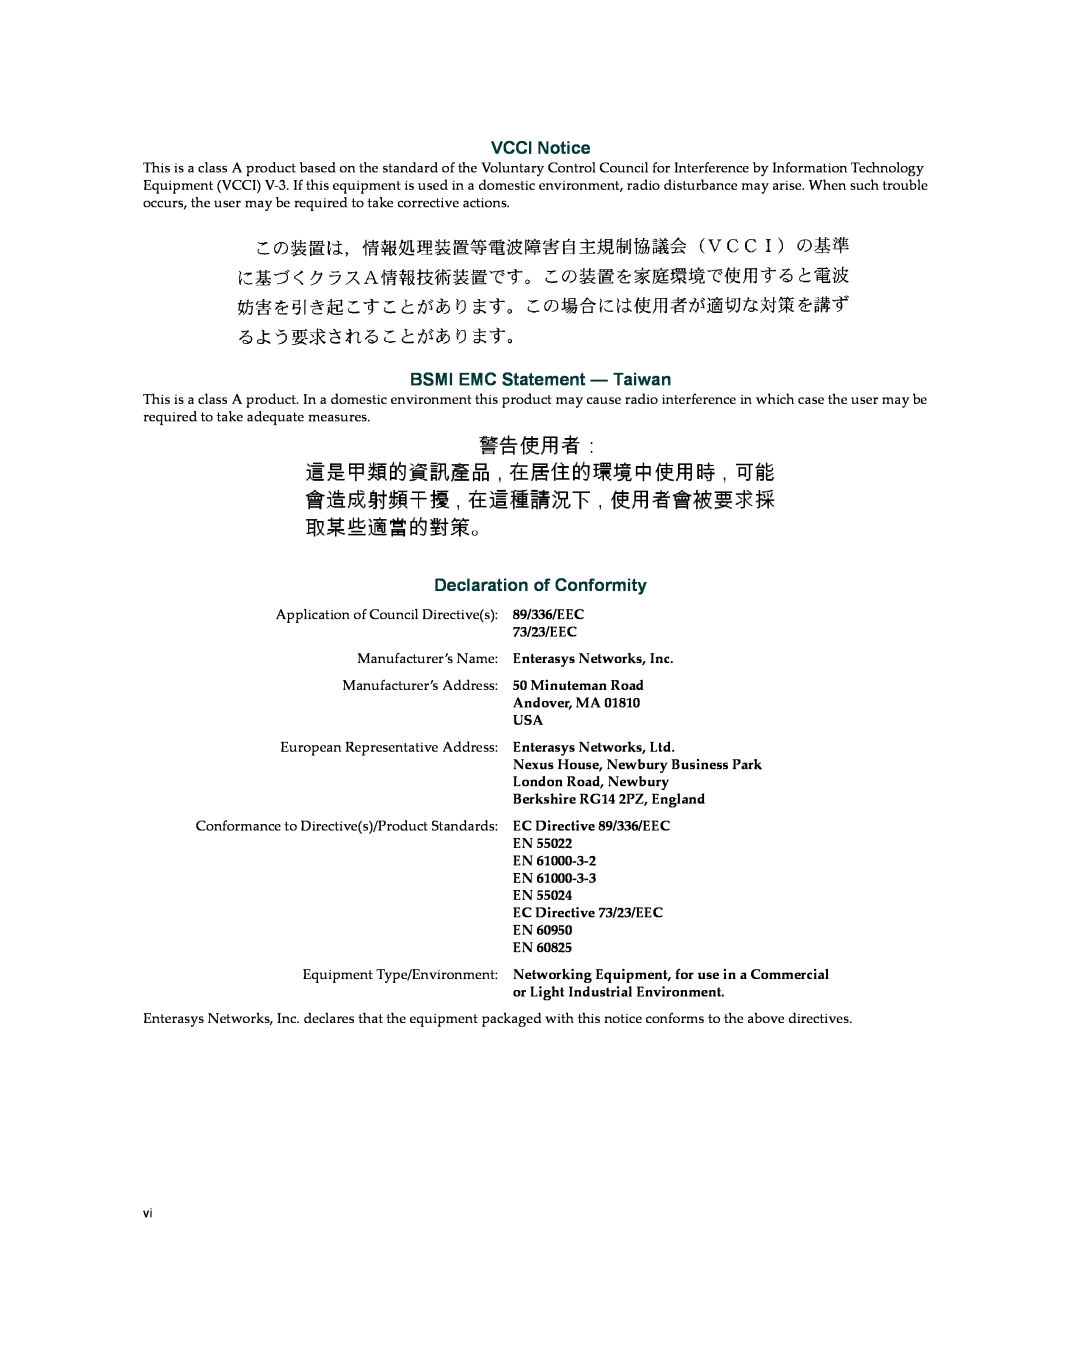 Enterasys Networks XSR-3020 manual VCCI Notice, BSMI EMC Statement - Taiwan, Declaration of Conformity, Andover, MA USA 